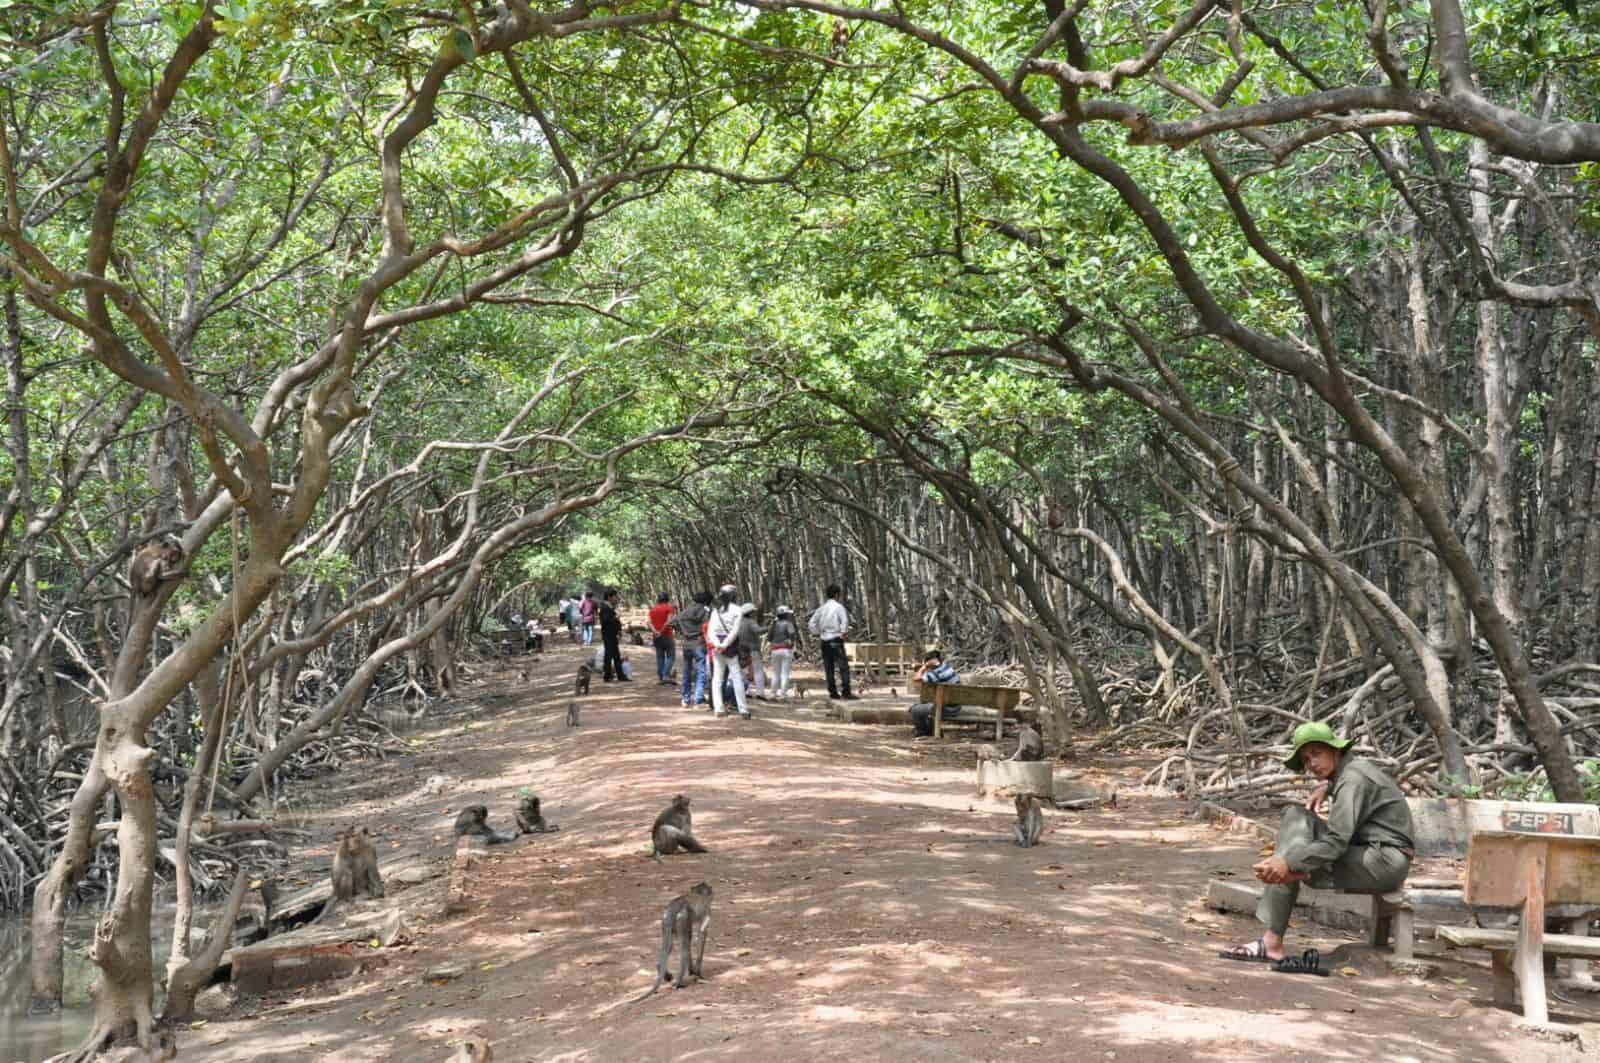 Mangrove forest near Saigon